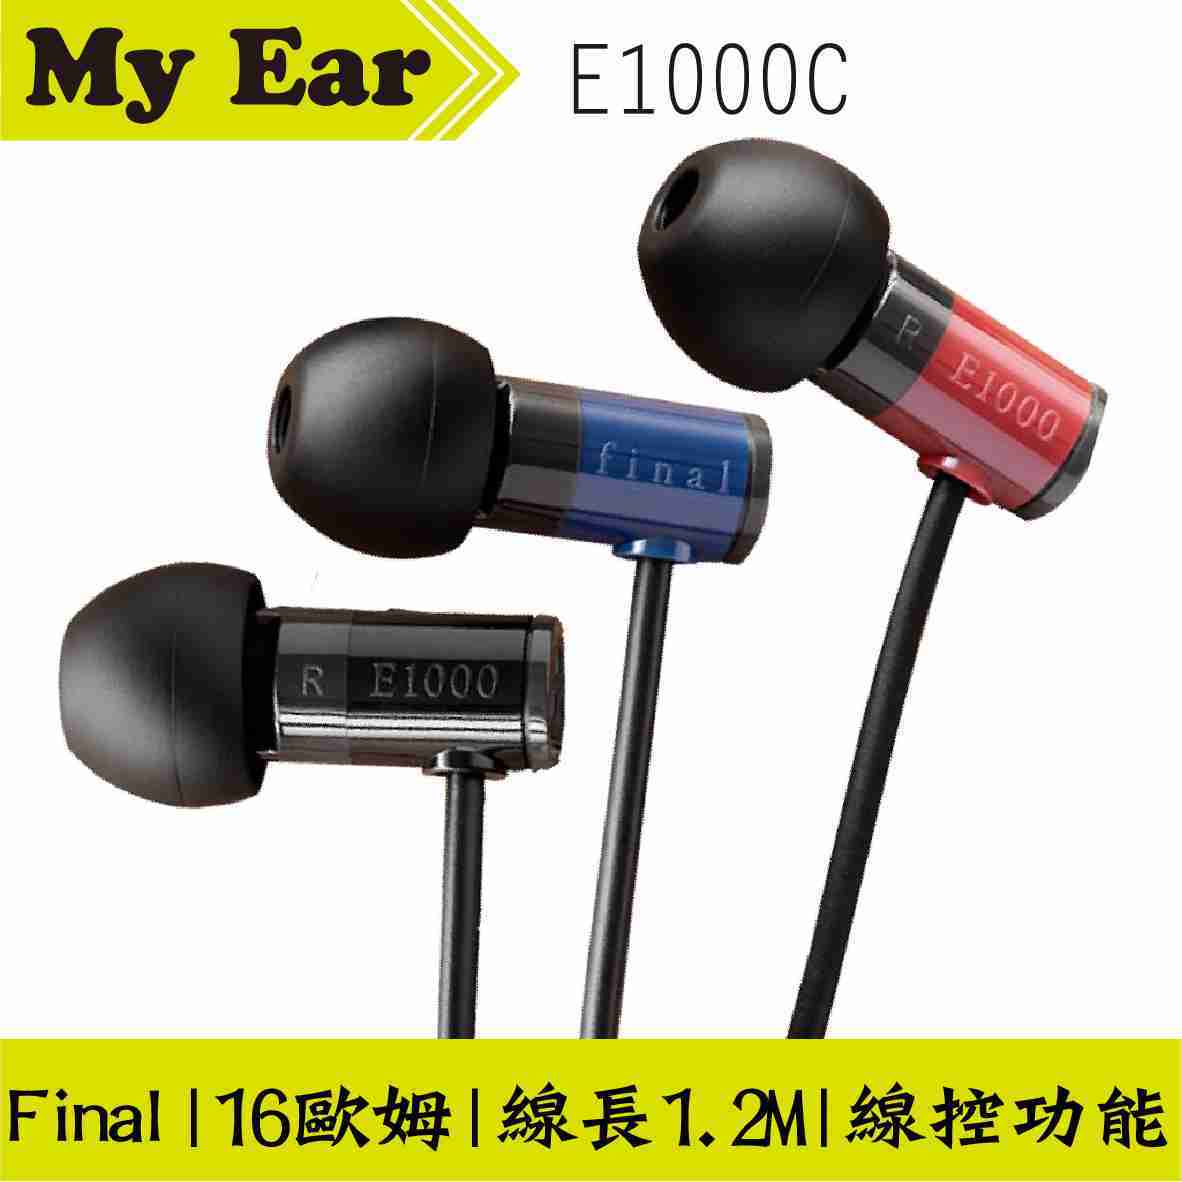 Final Audio E1000C 入耳式耳機 多色可選 線控 通話 | My Ear 耳機專門店